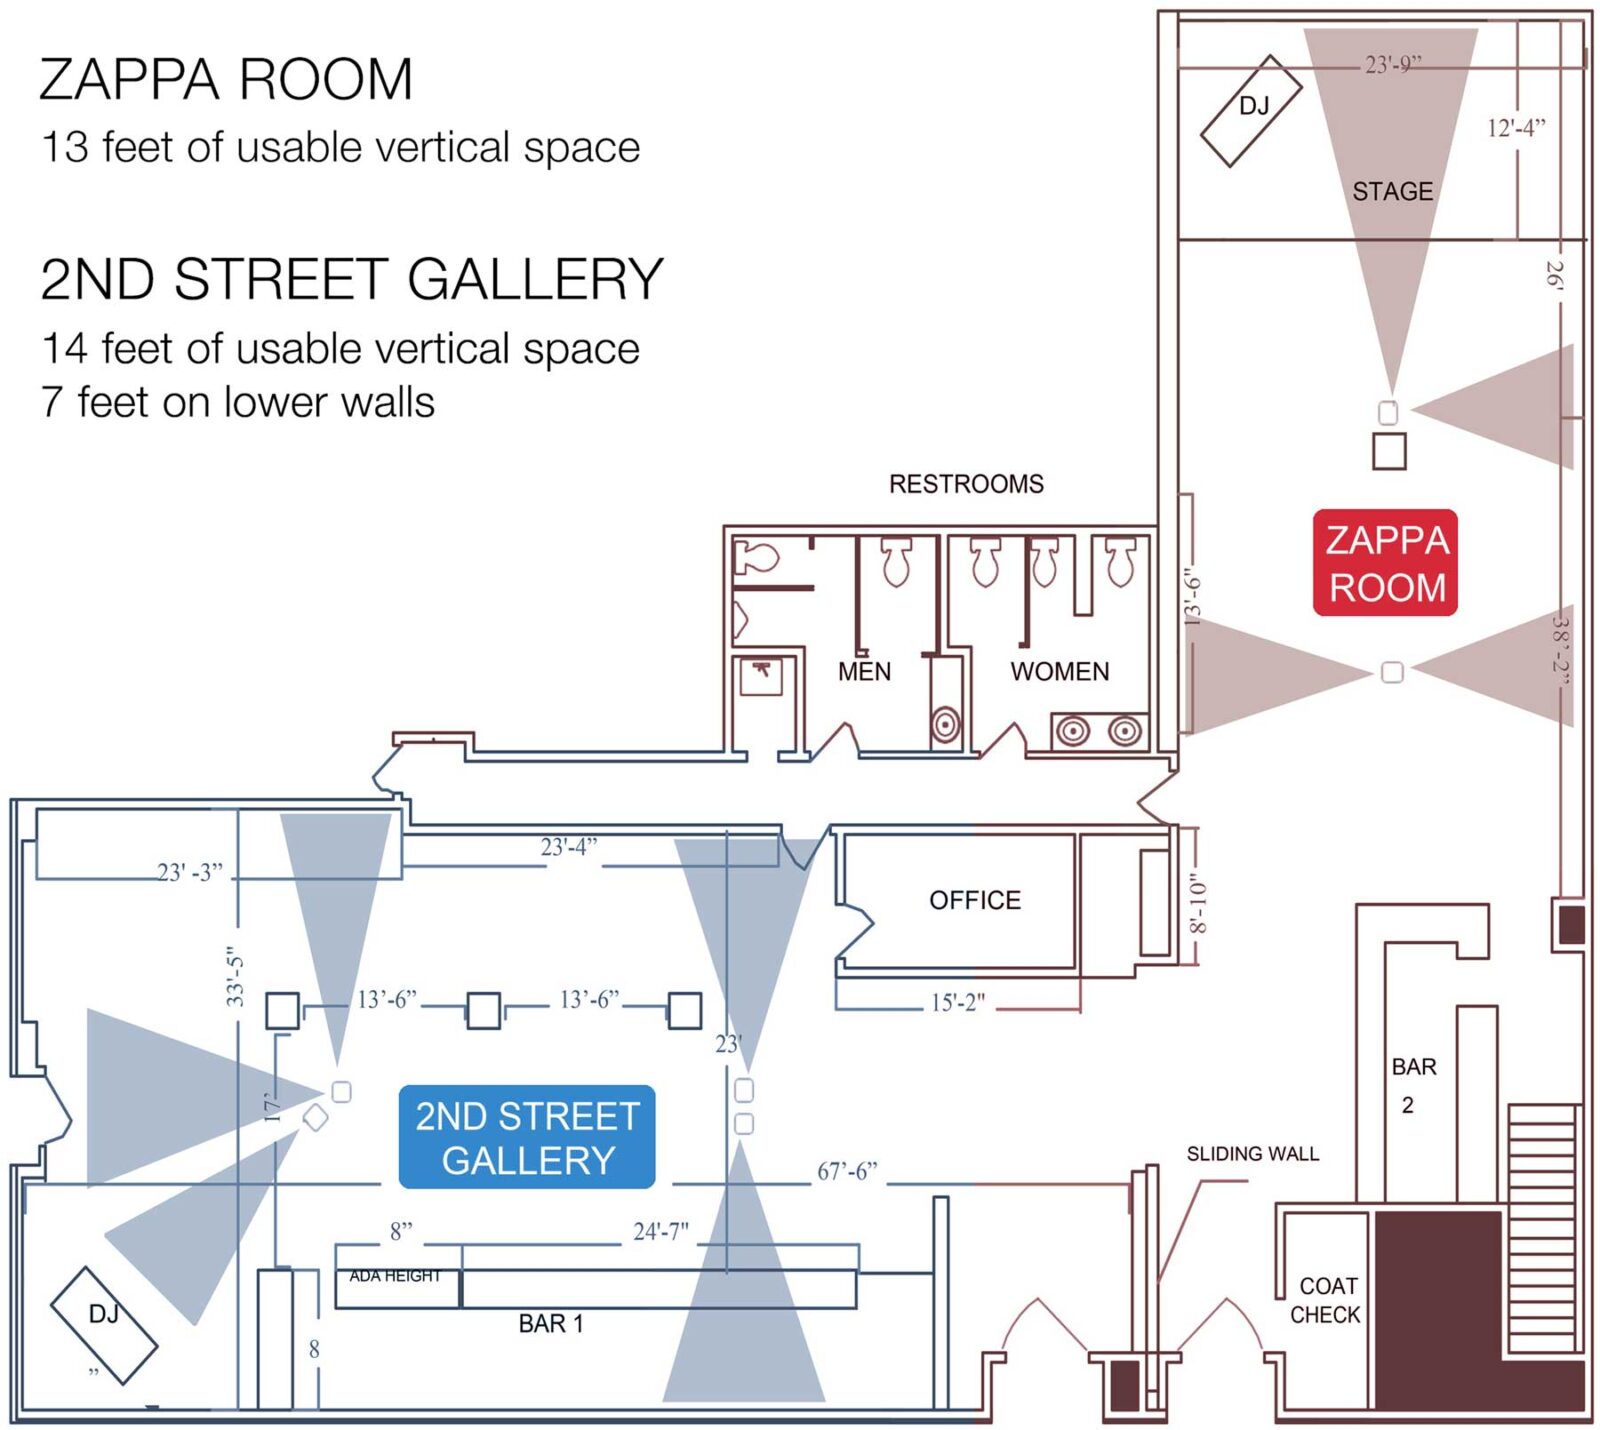 111 Minna Gallery Floor Plan